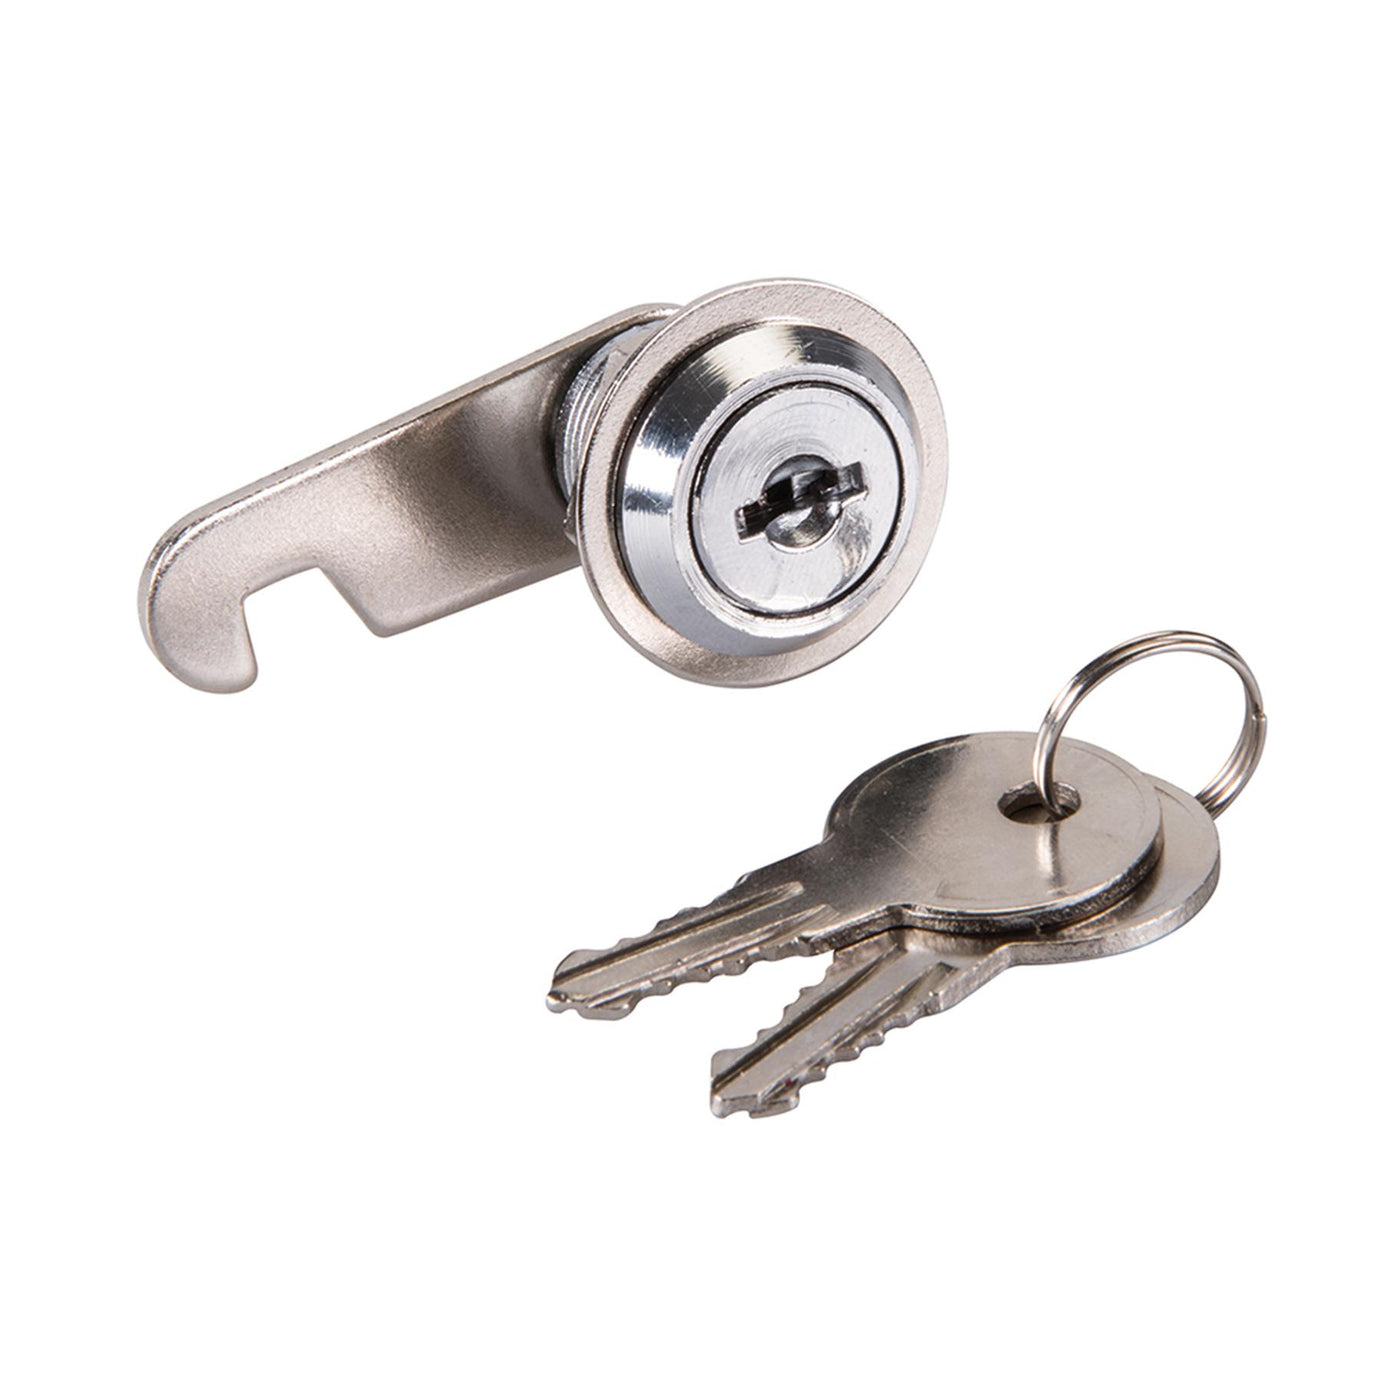 16mm Cam Lock For Filing Cabinet Mailbox Drawer Locker Secure Keys Nickel Plated